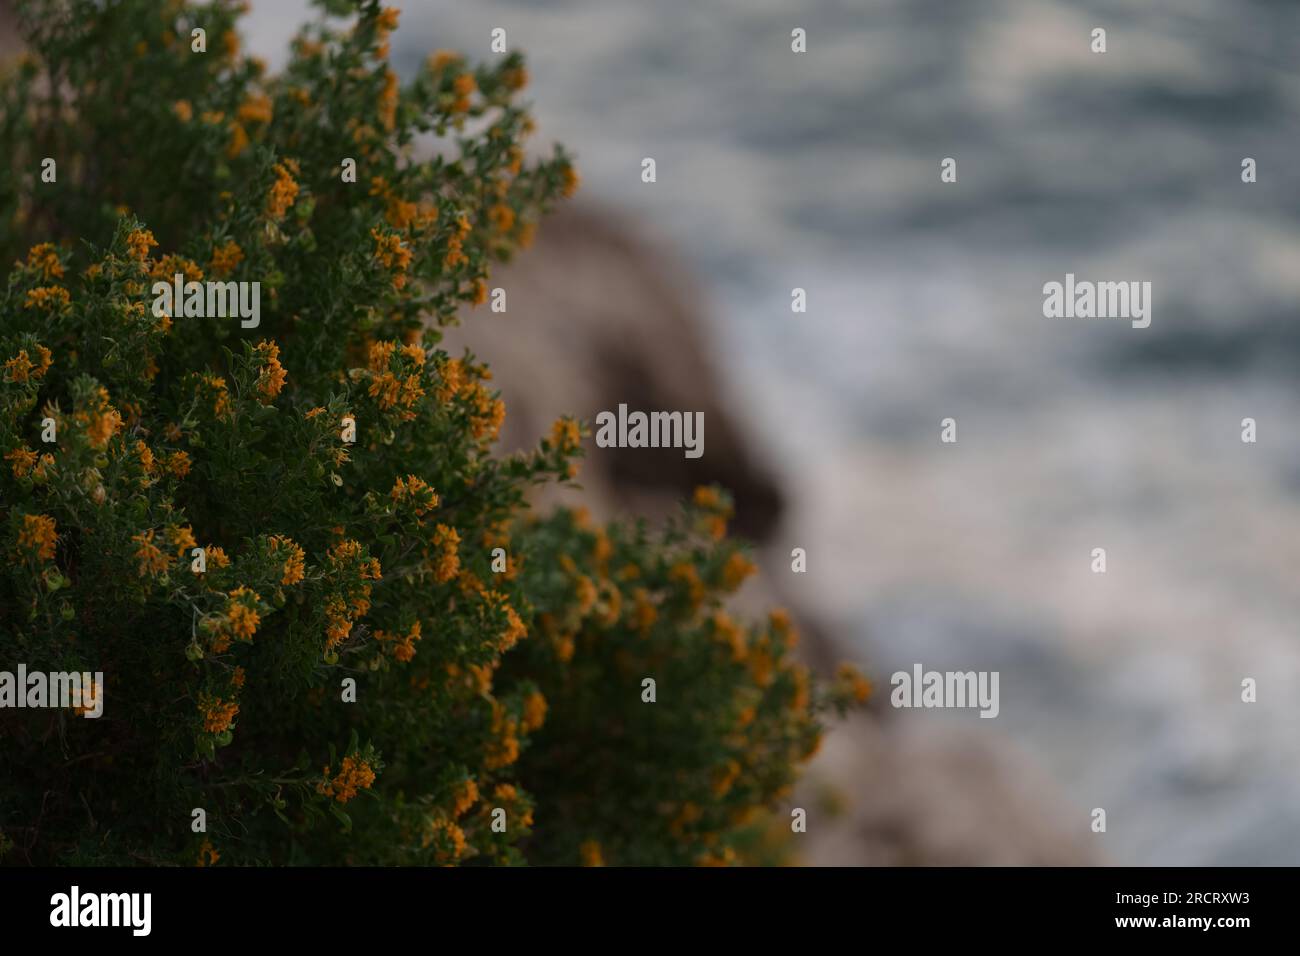 Medicago arborea blossom with copy space background, shallow focus Stock Photo